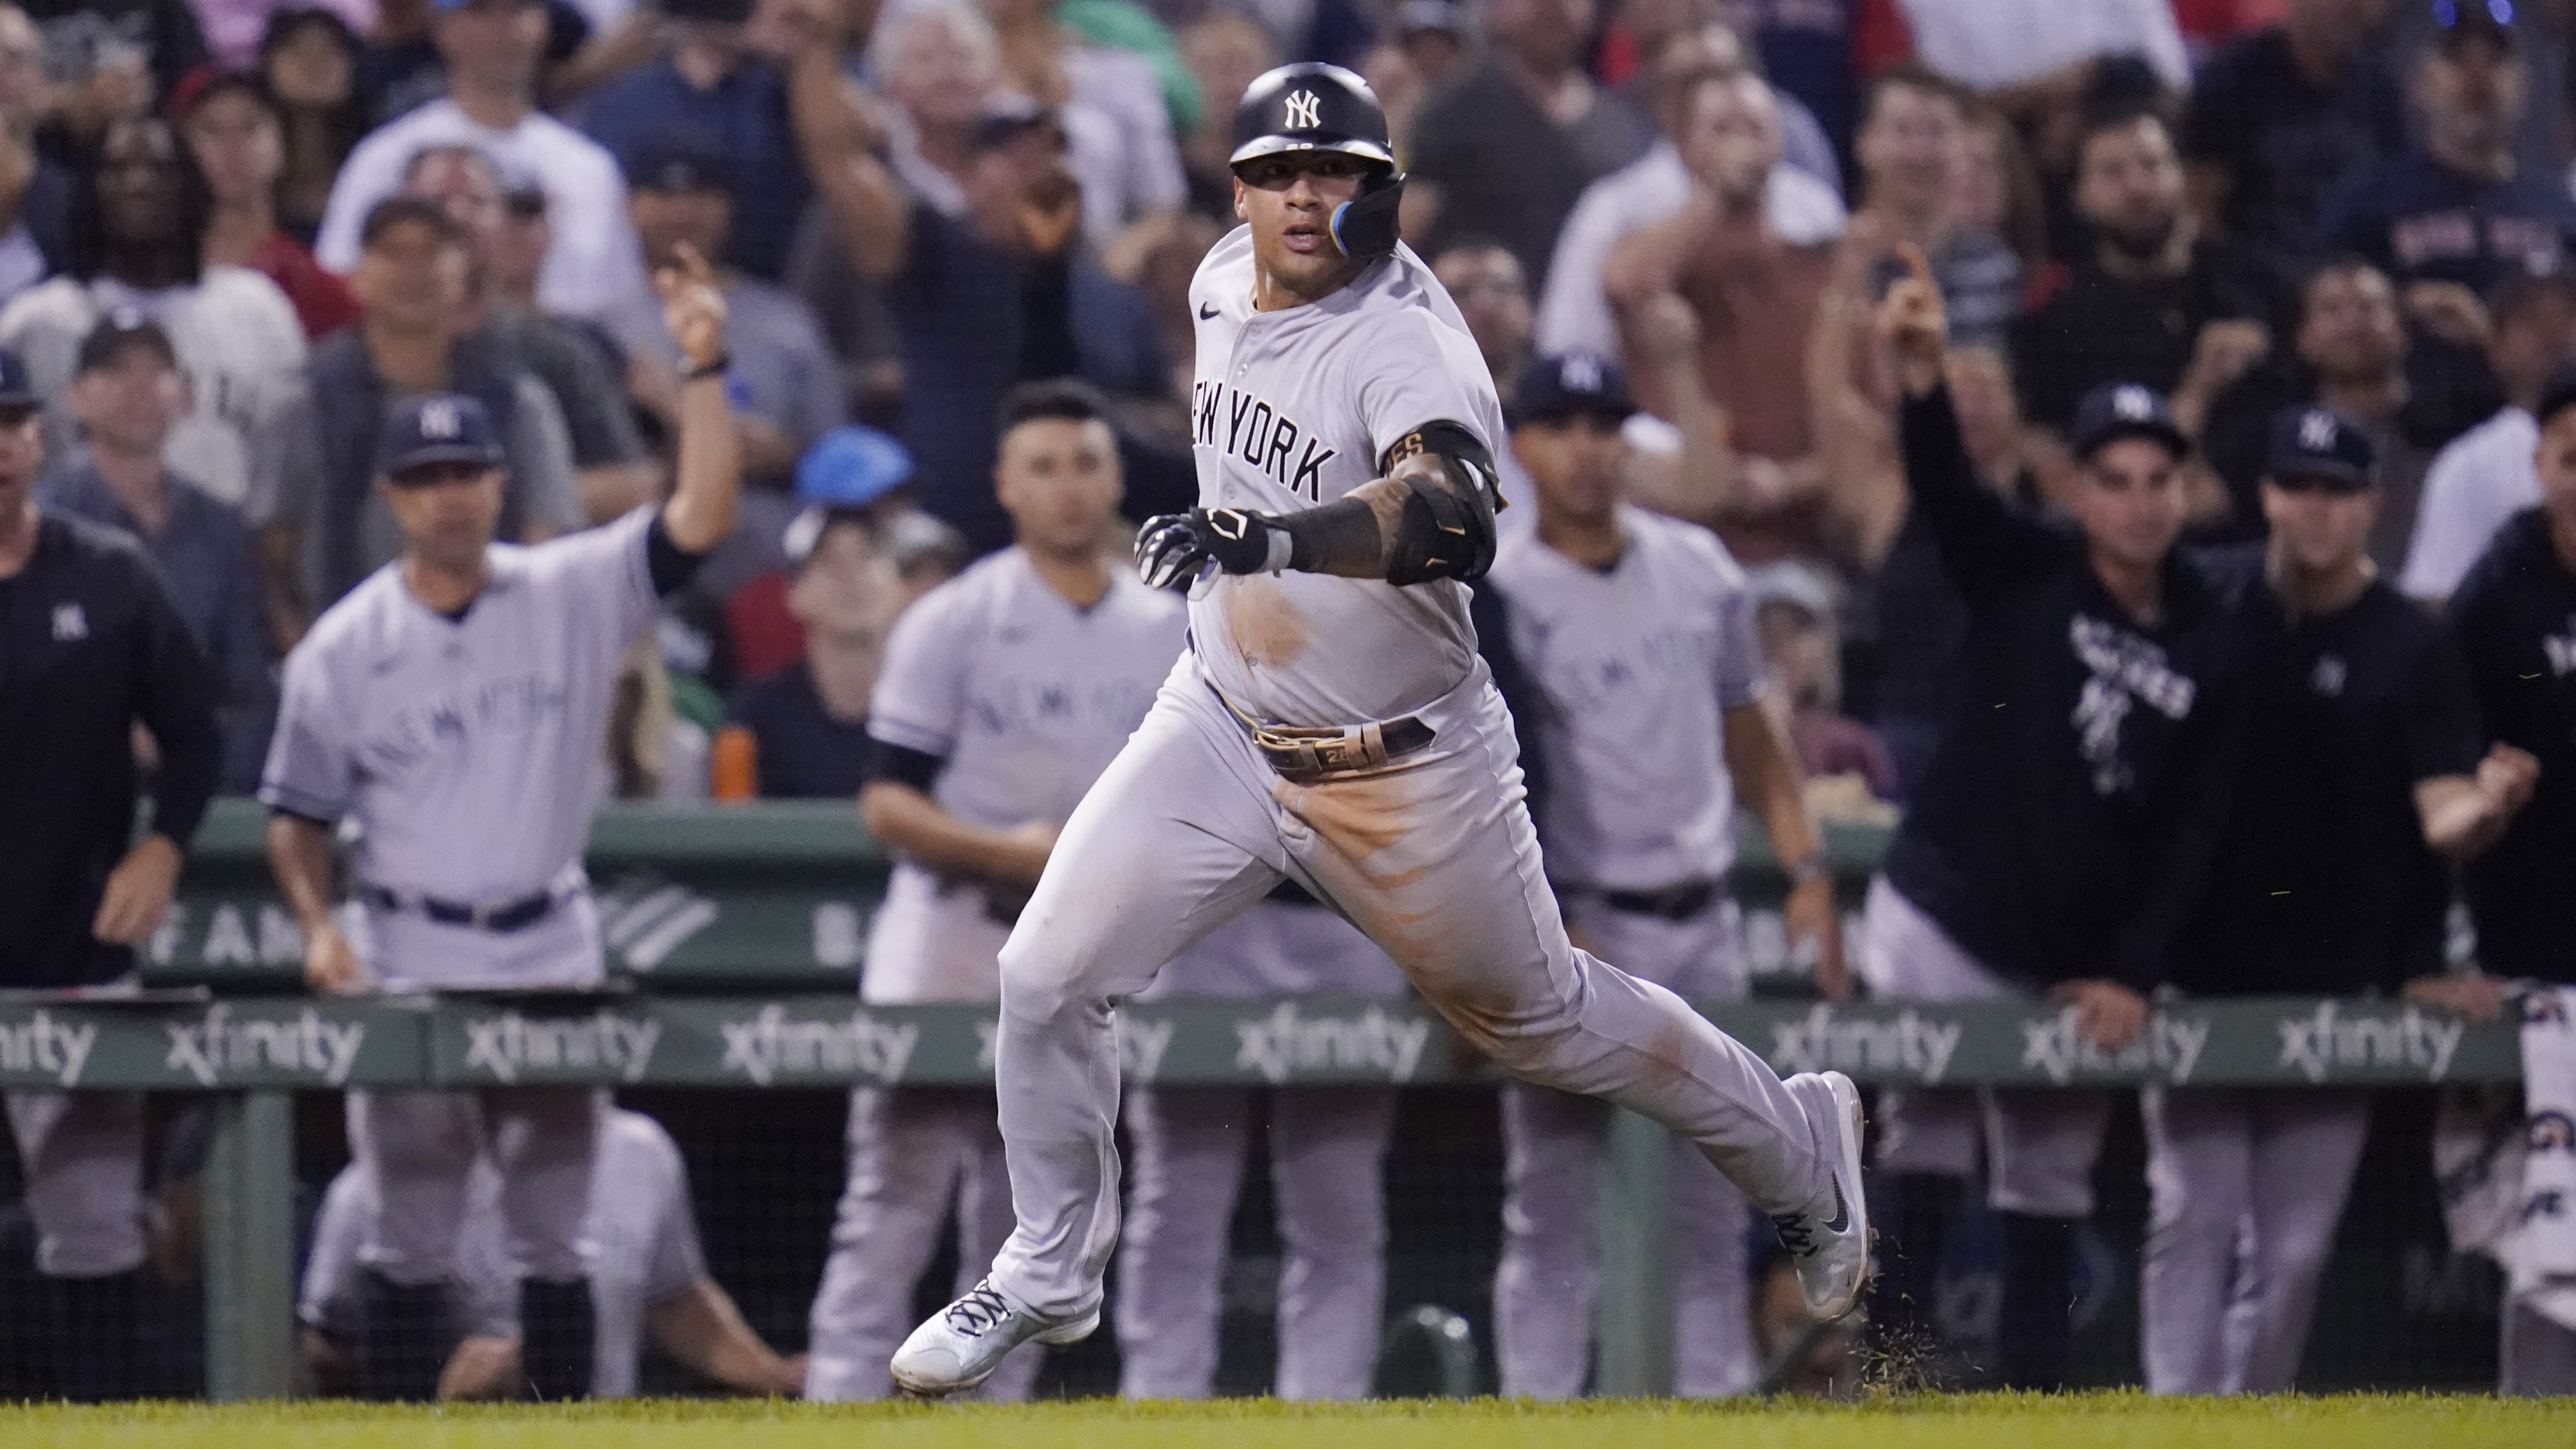 Leiter rewards Yanks, stifles Sox Late Boston rally falls short